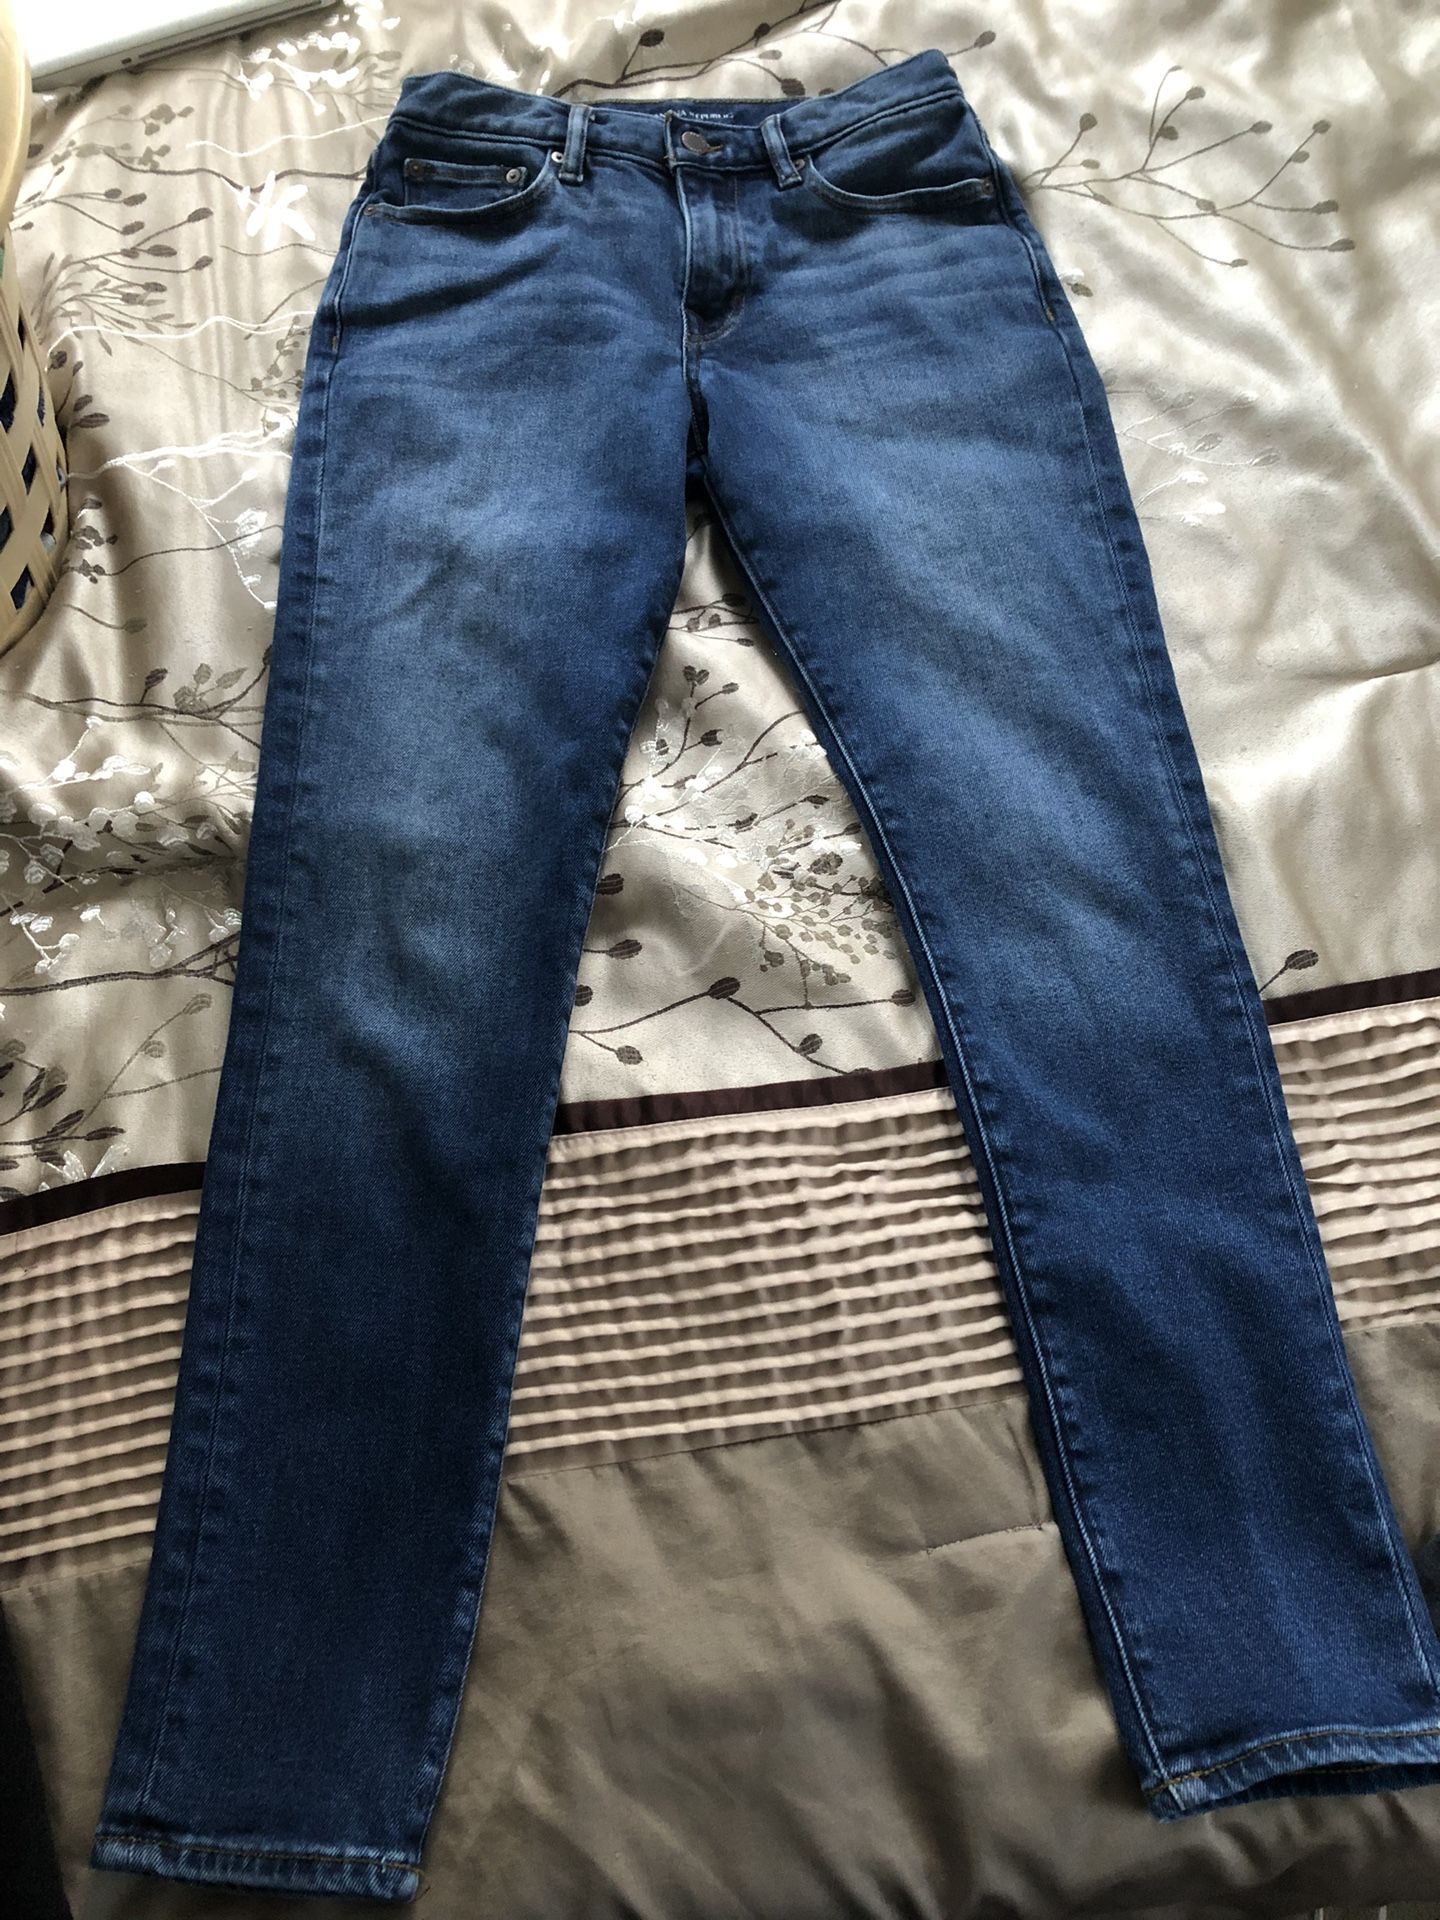 Men’s Jeans, Banana Republic, Slim Fit, Blue, 30 x 32